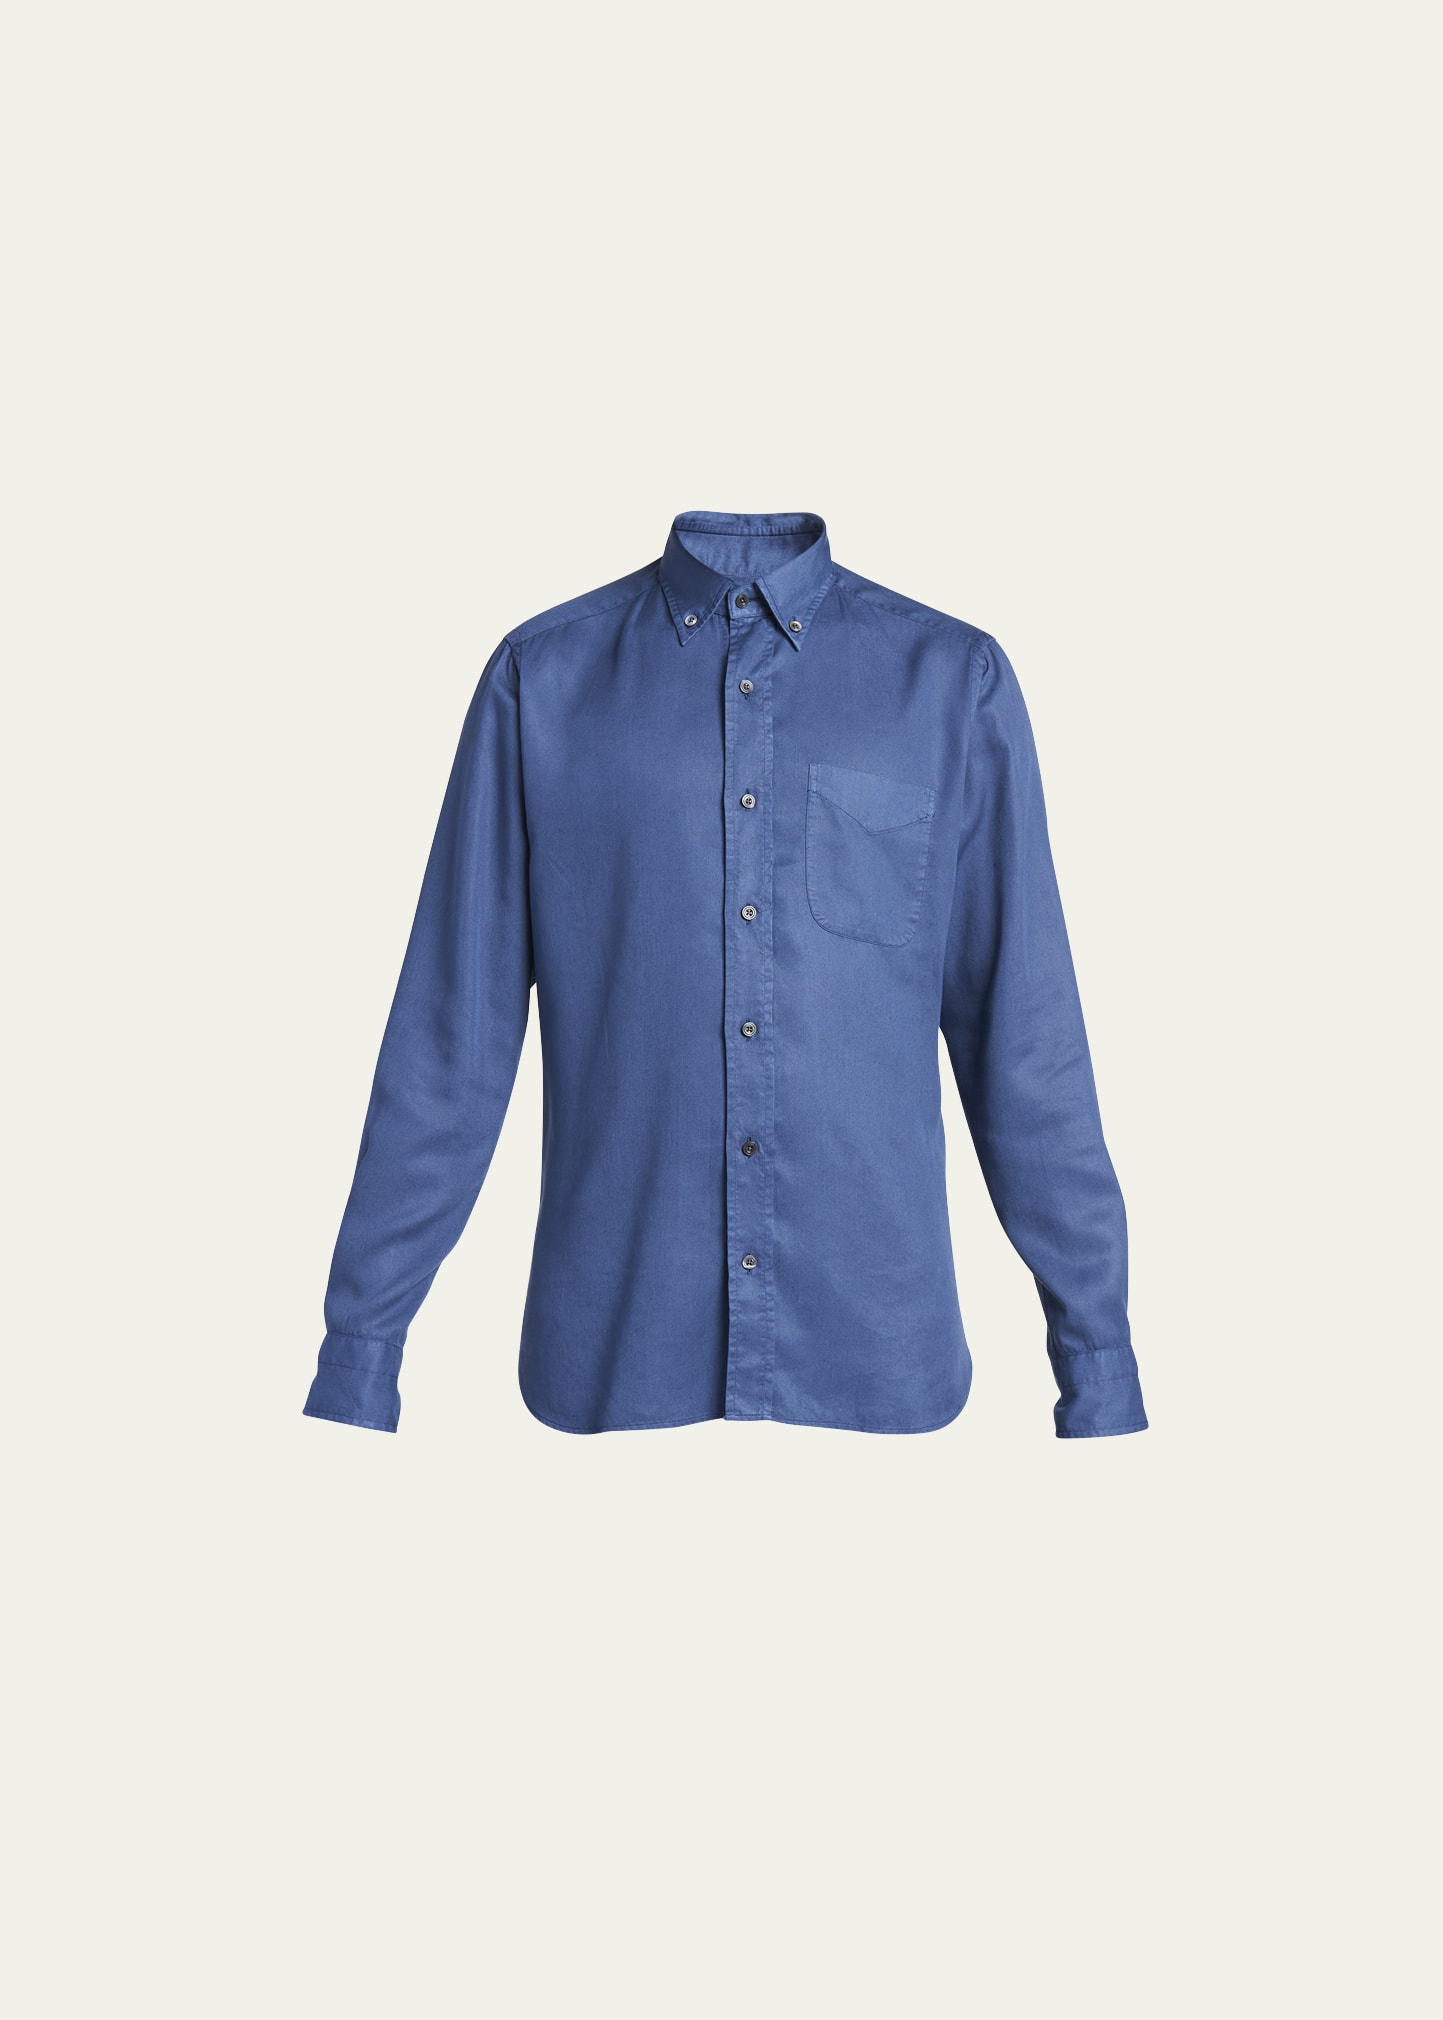 Tom Ford Men's Slim Fit Sport Shirt In Blue